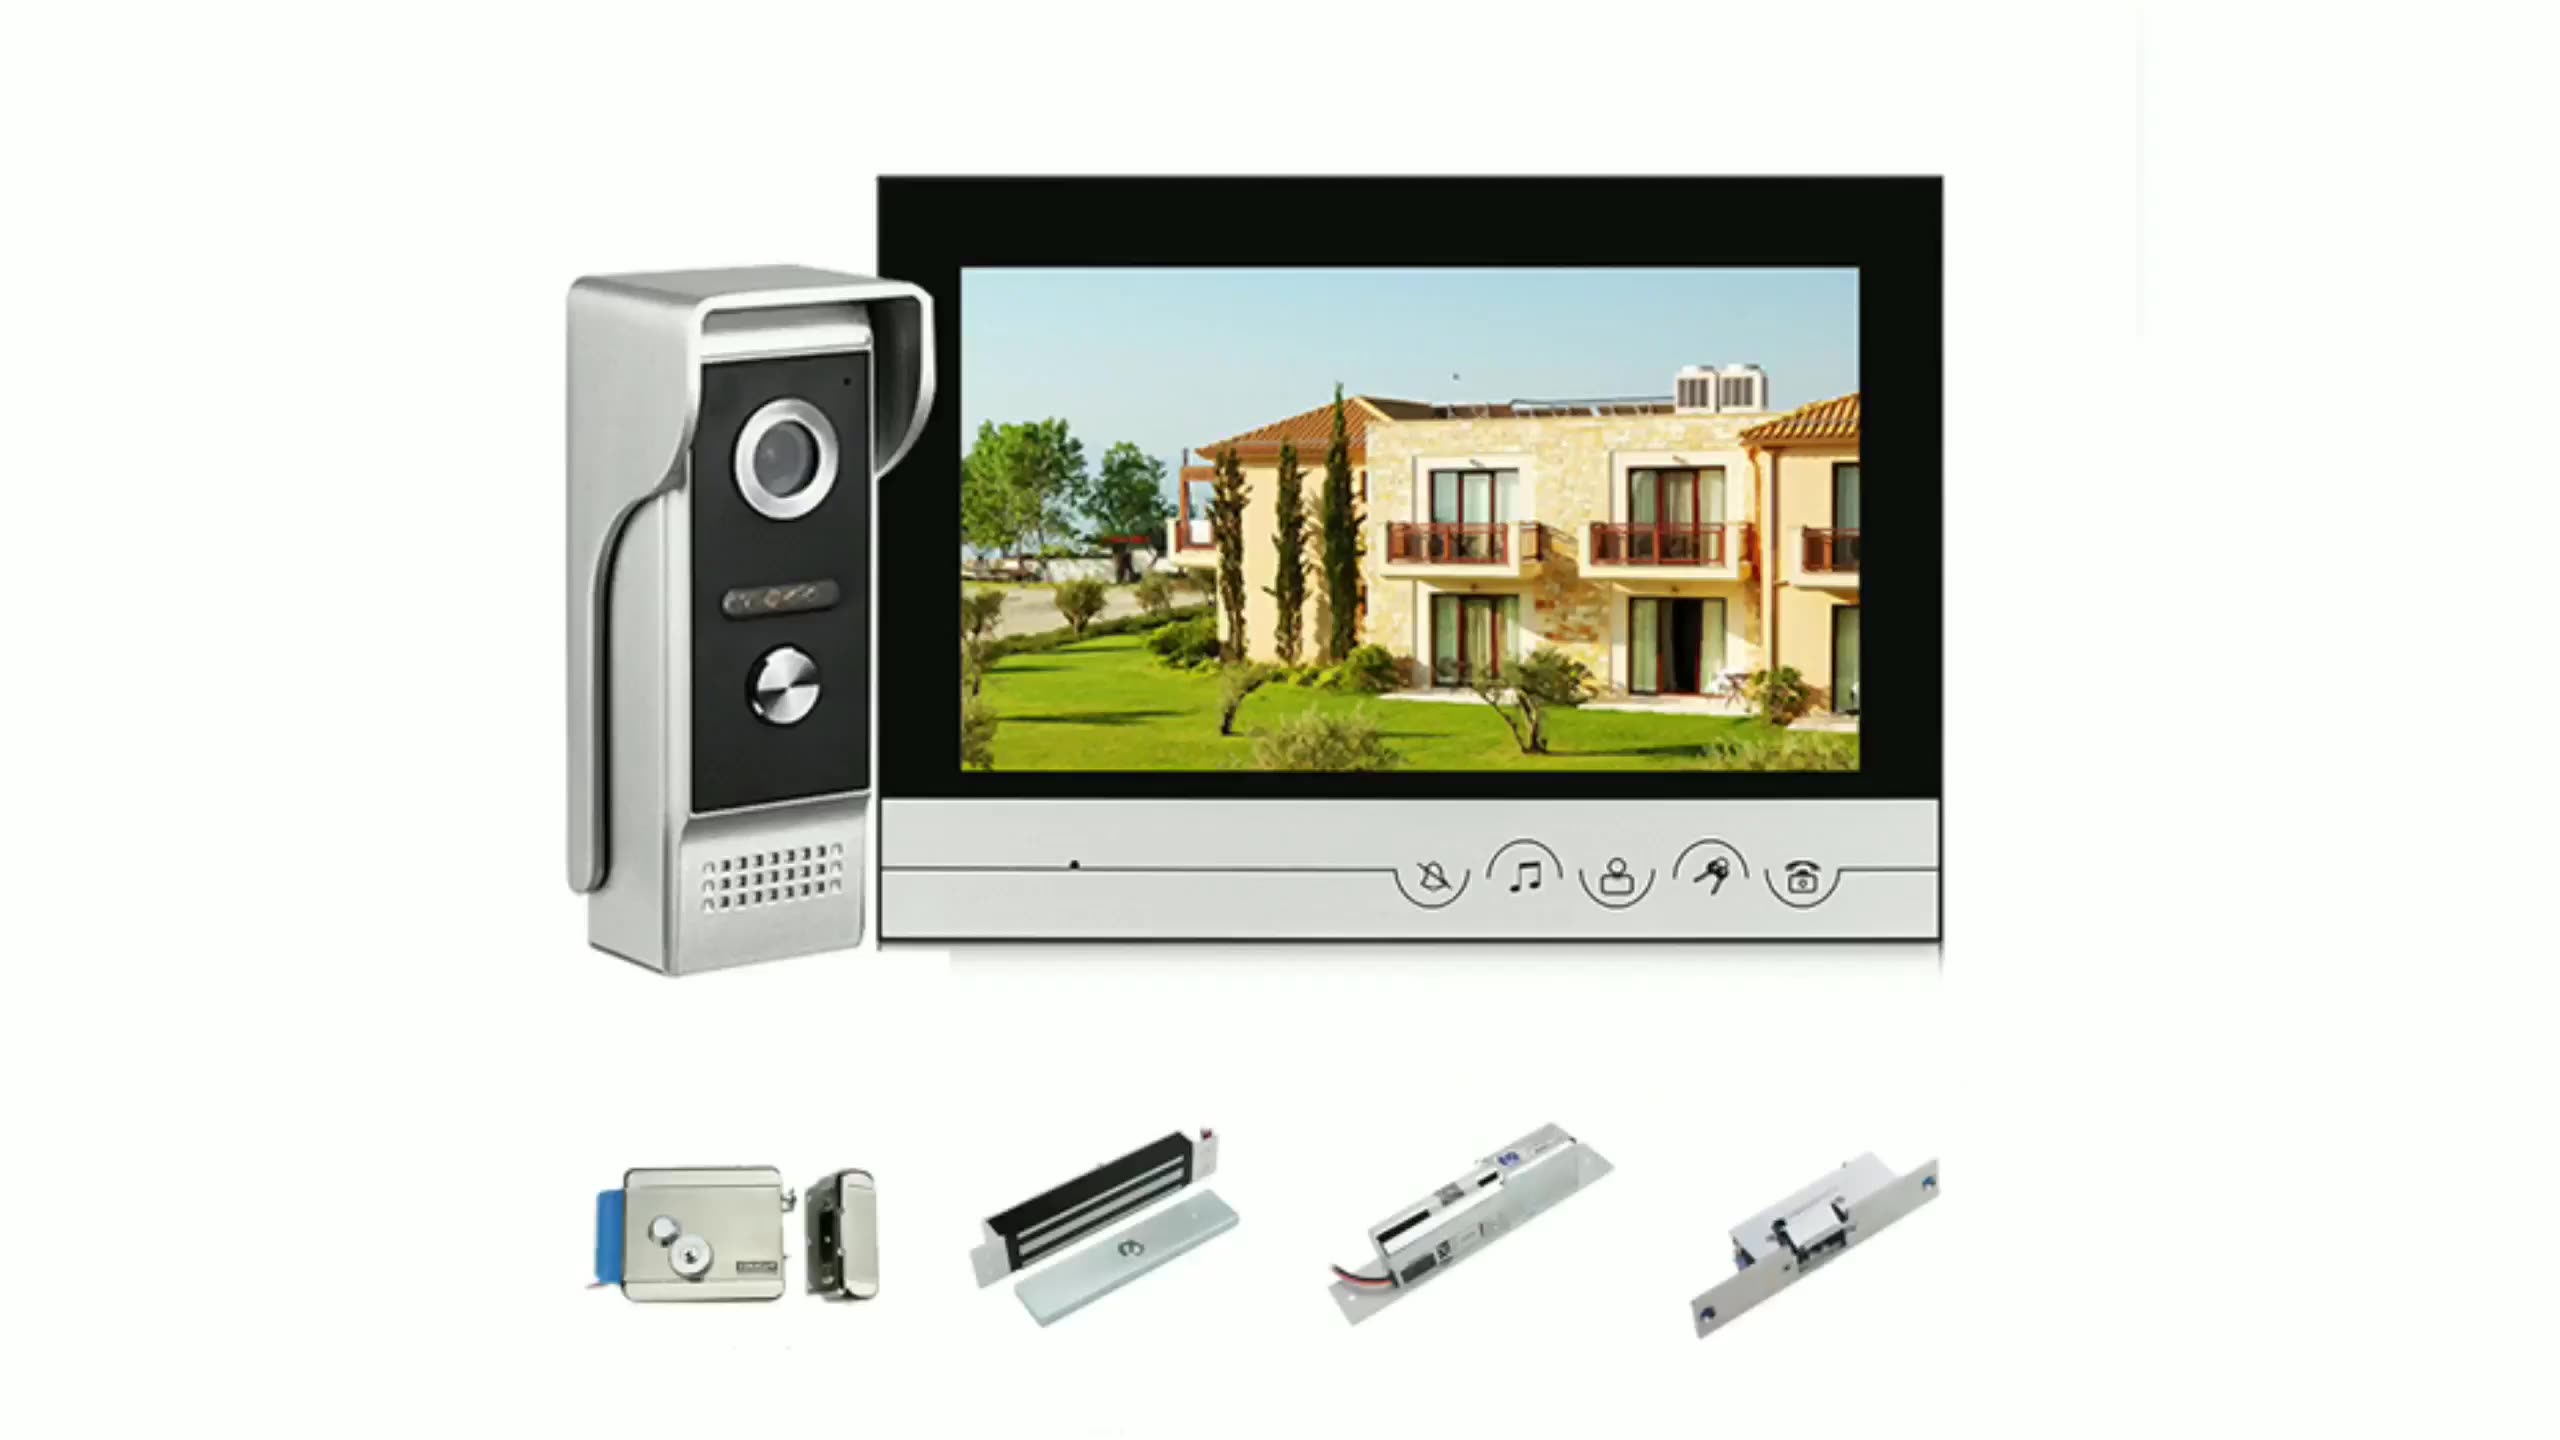 Apartamento 4 alambre Video Door Phone Bell Monitor Video Intercoming Toulebell1